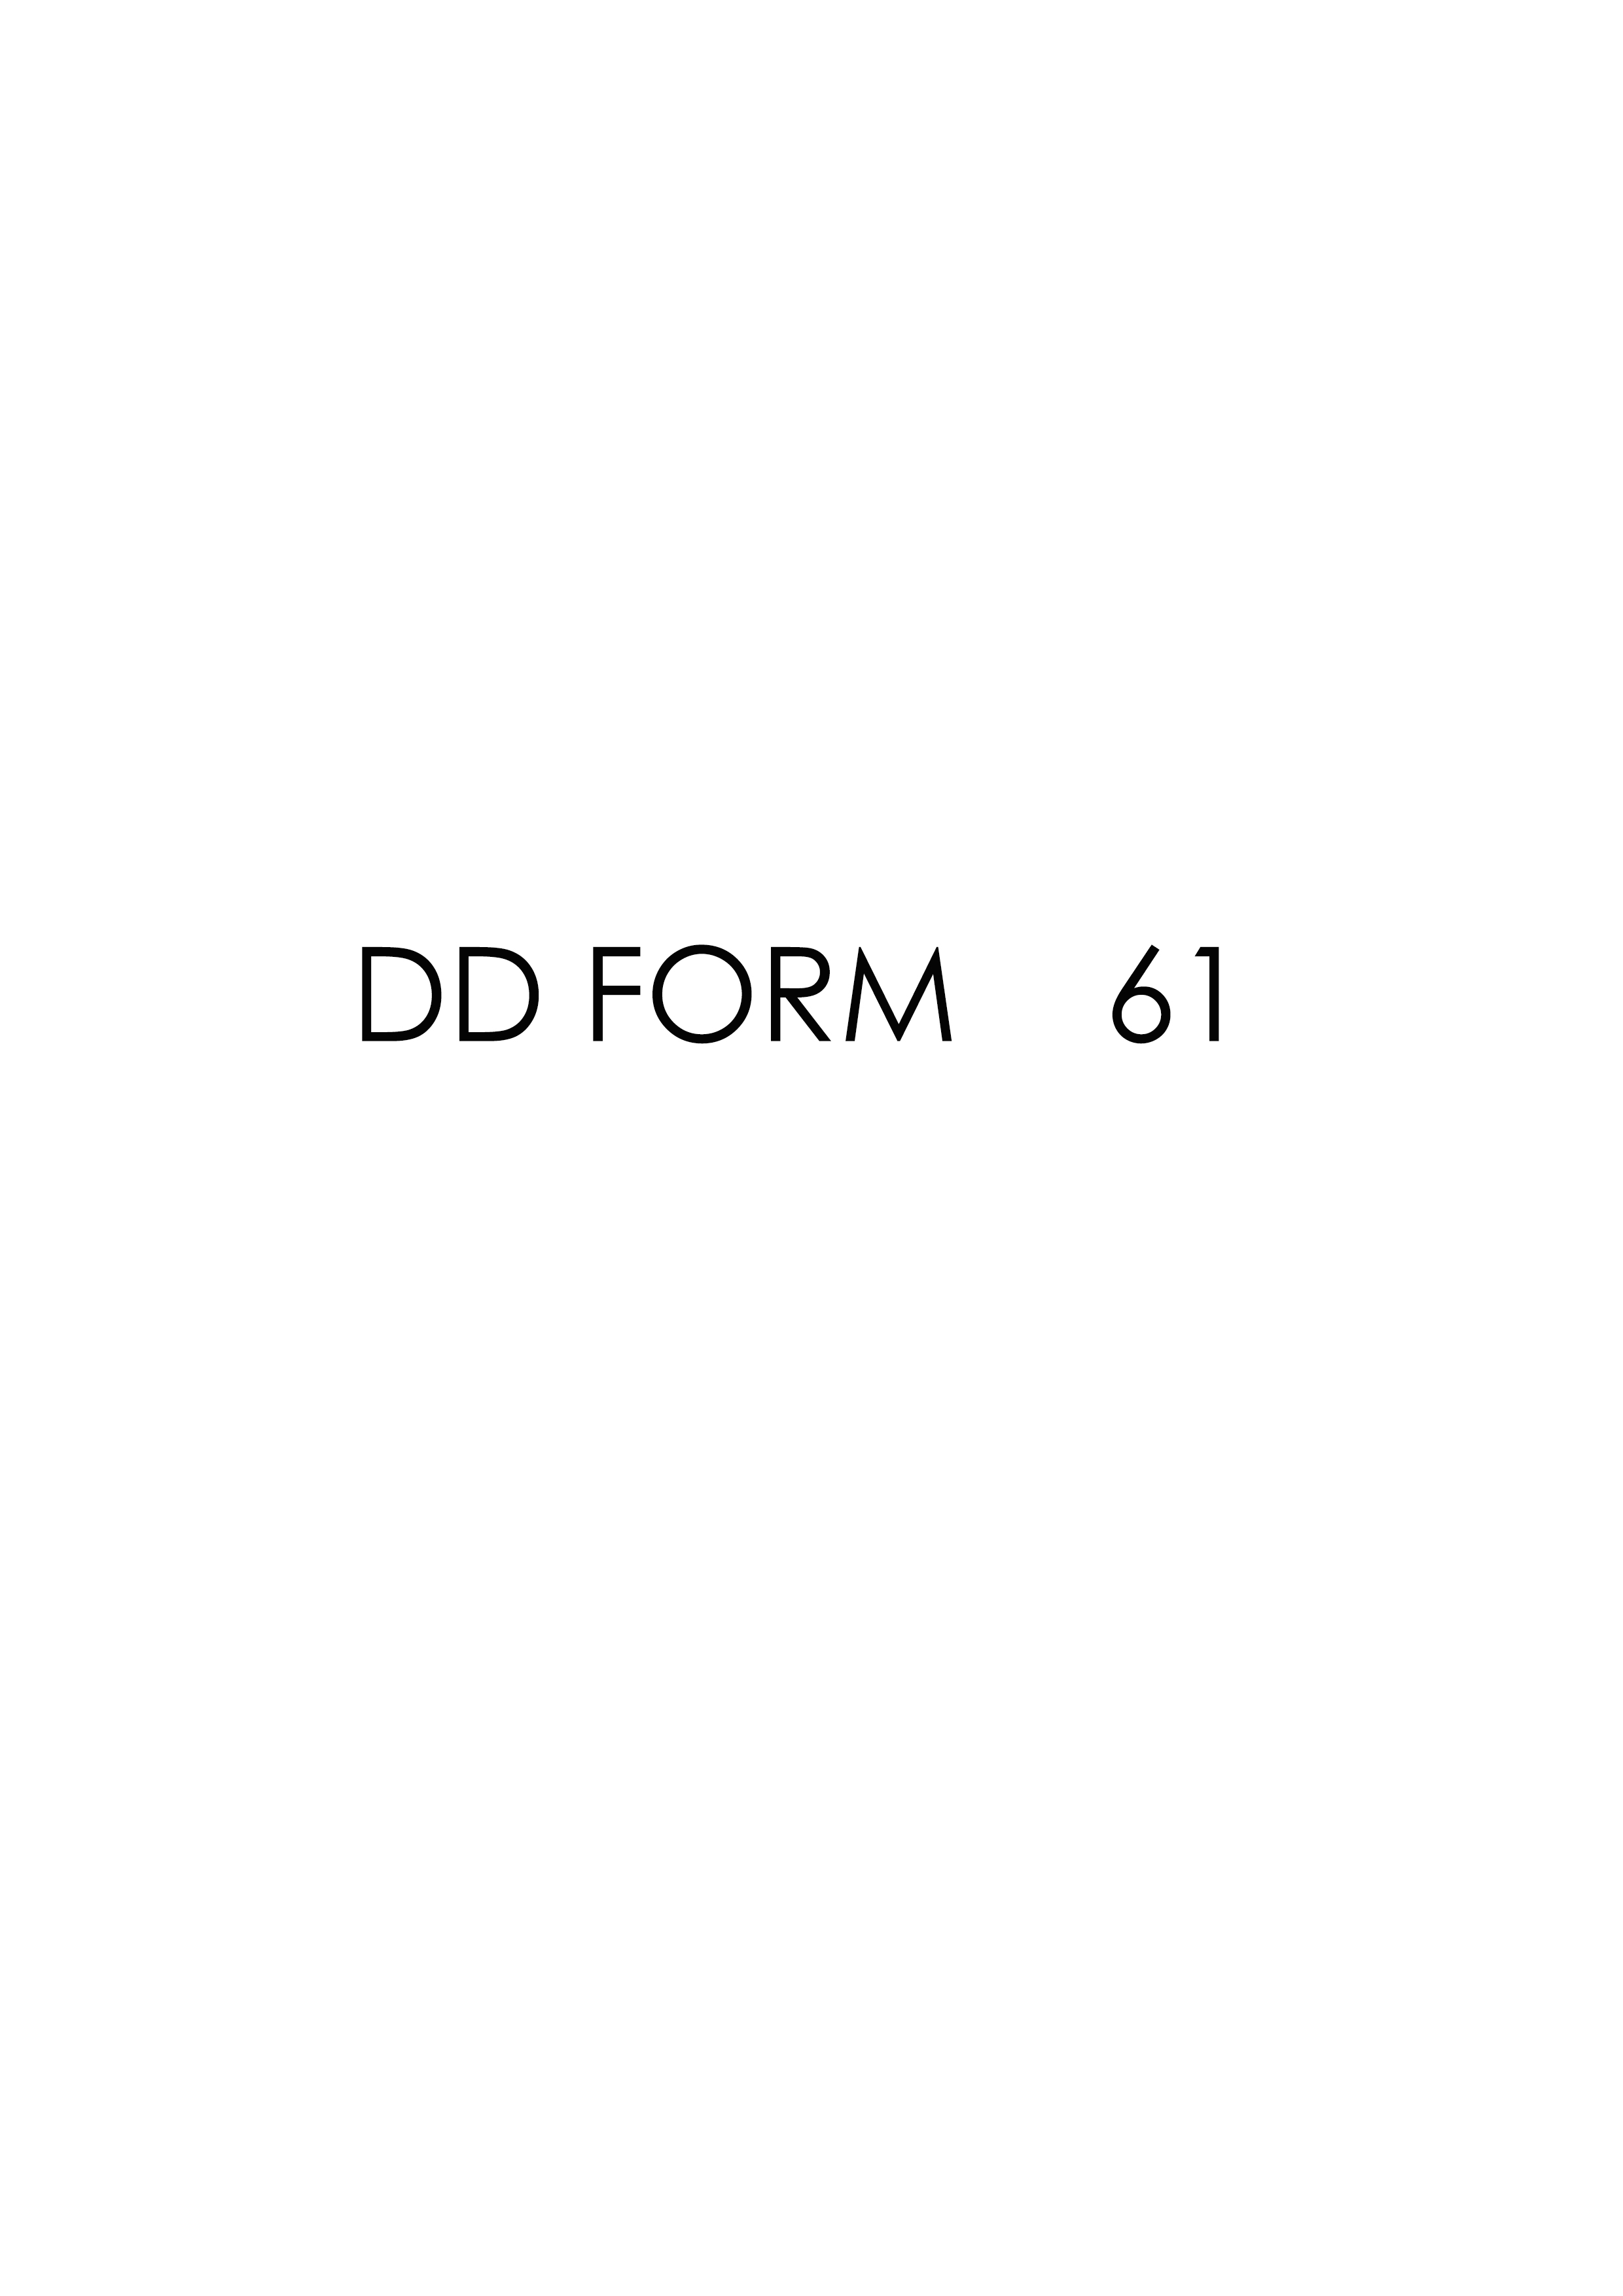 Download dd 61 Form